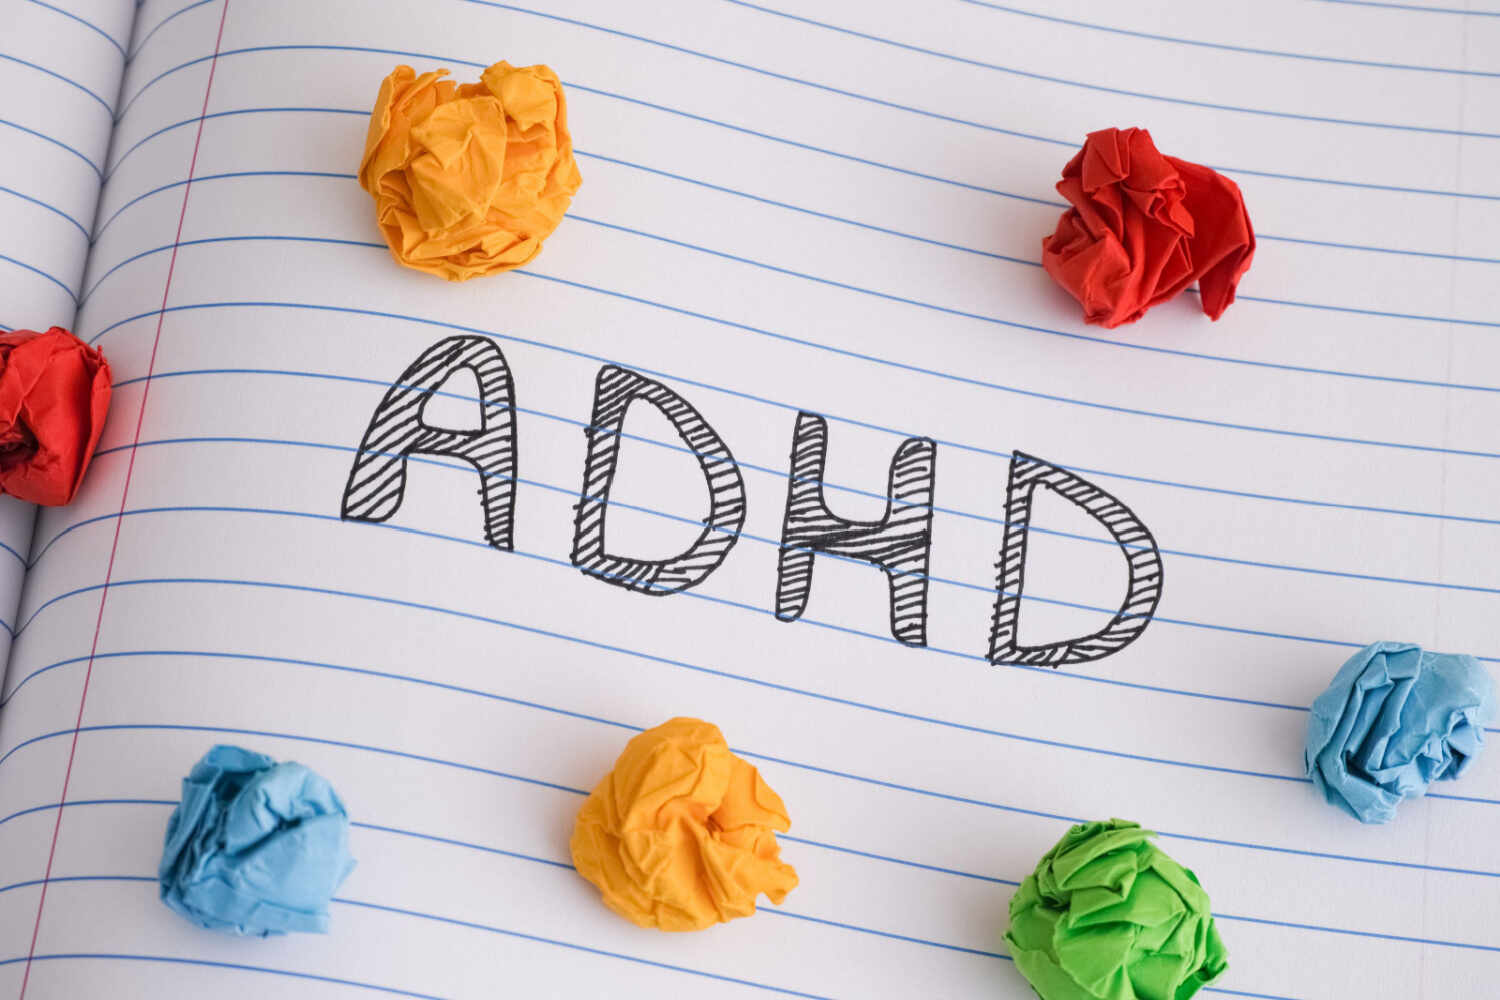 Omega-3 may help improve ADHD symptoms